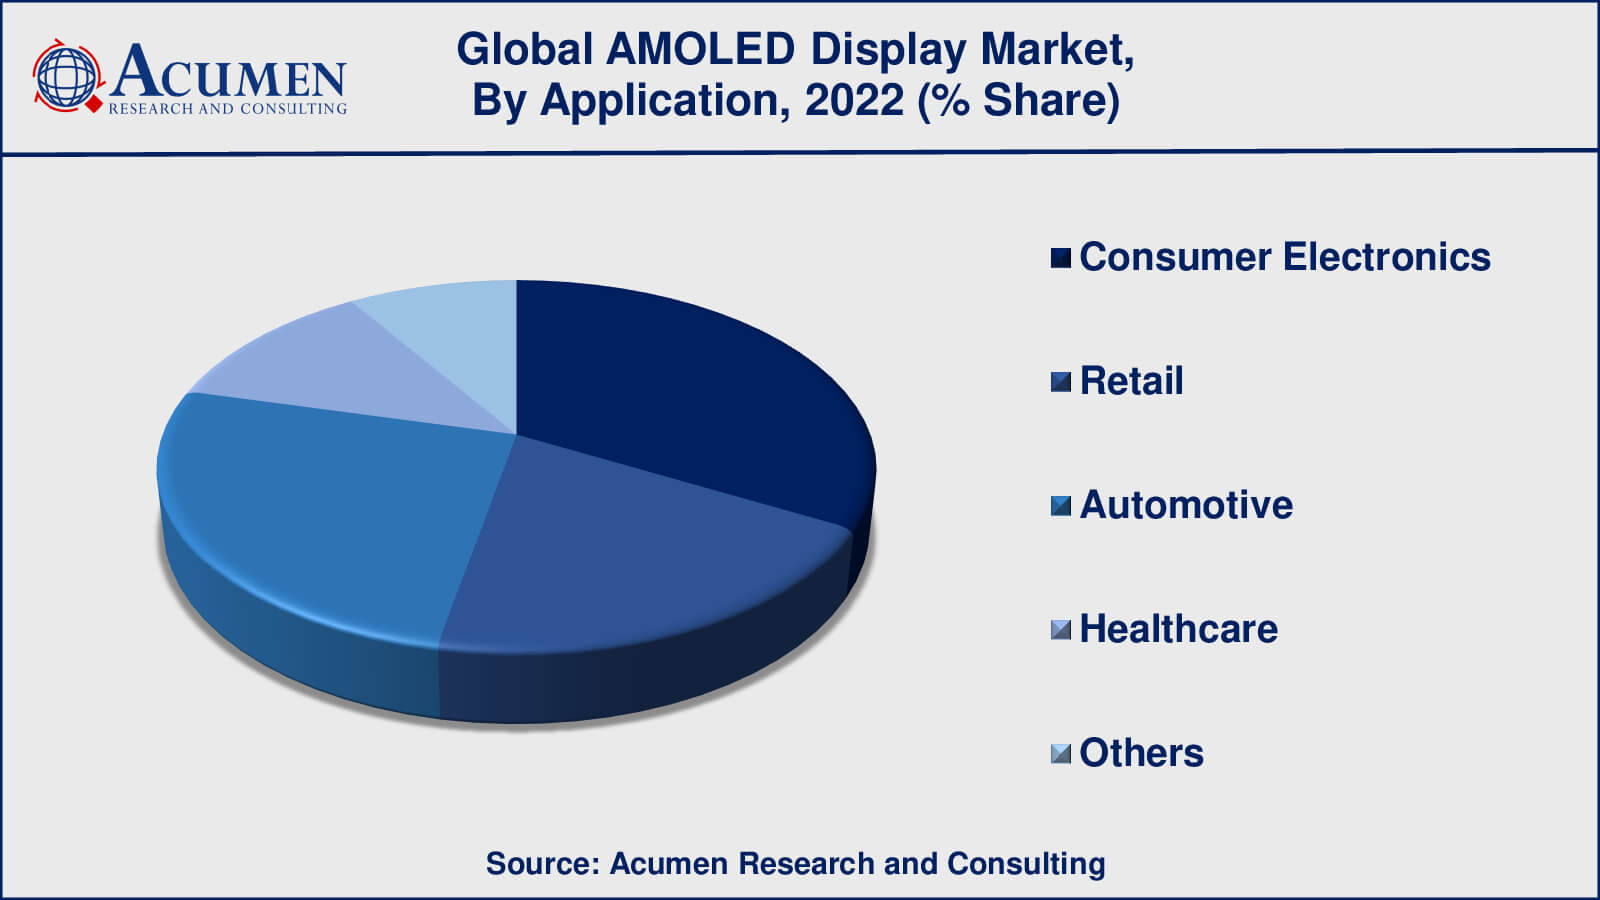 AMOLED Display Market Growth Factors